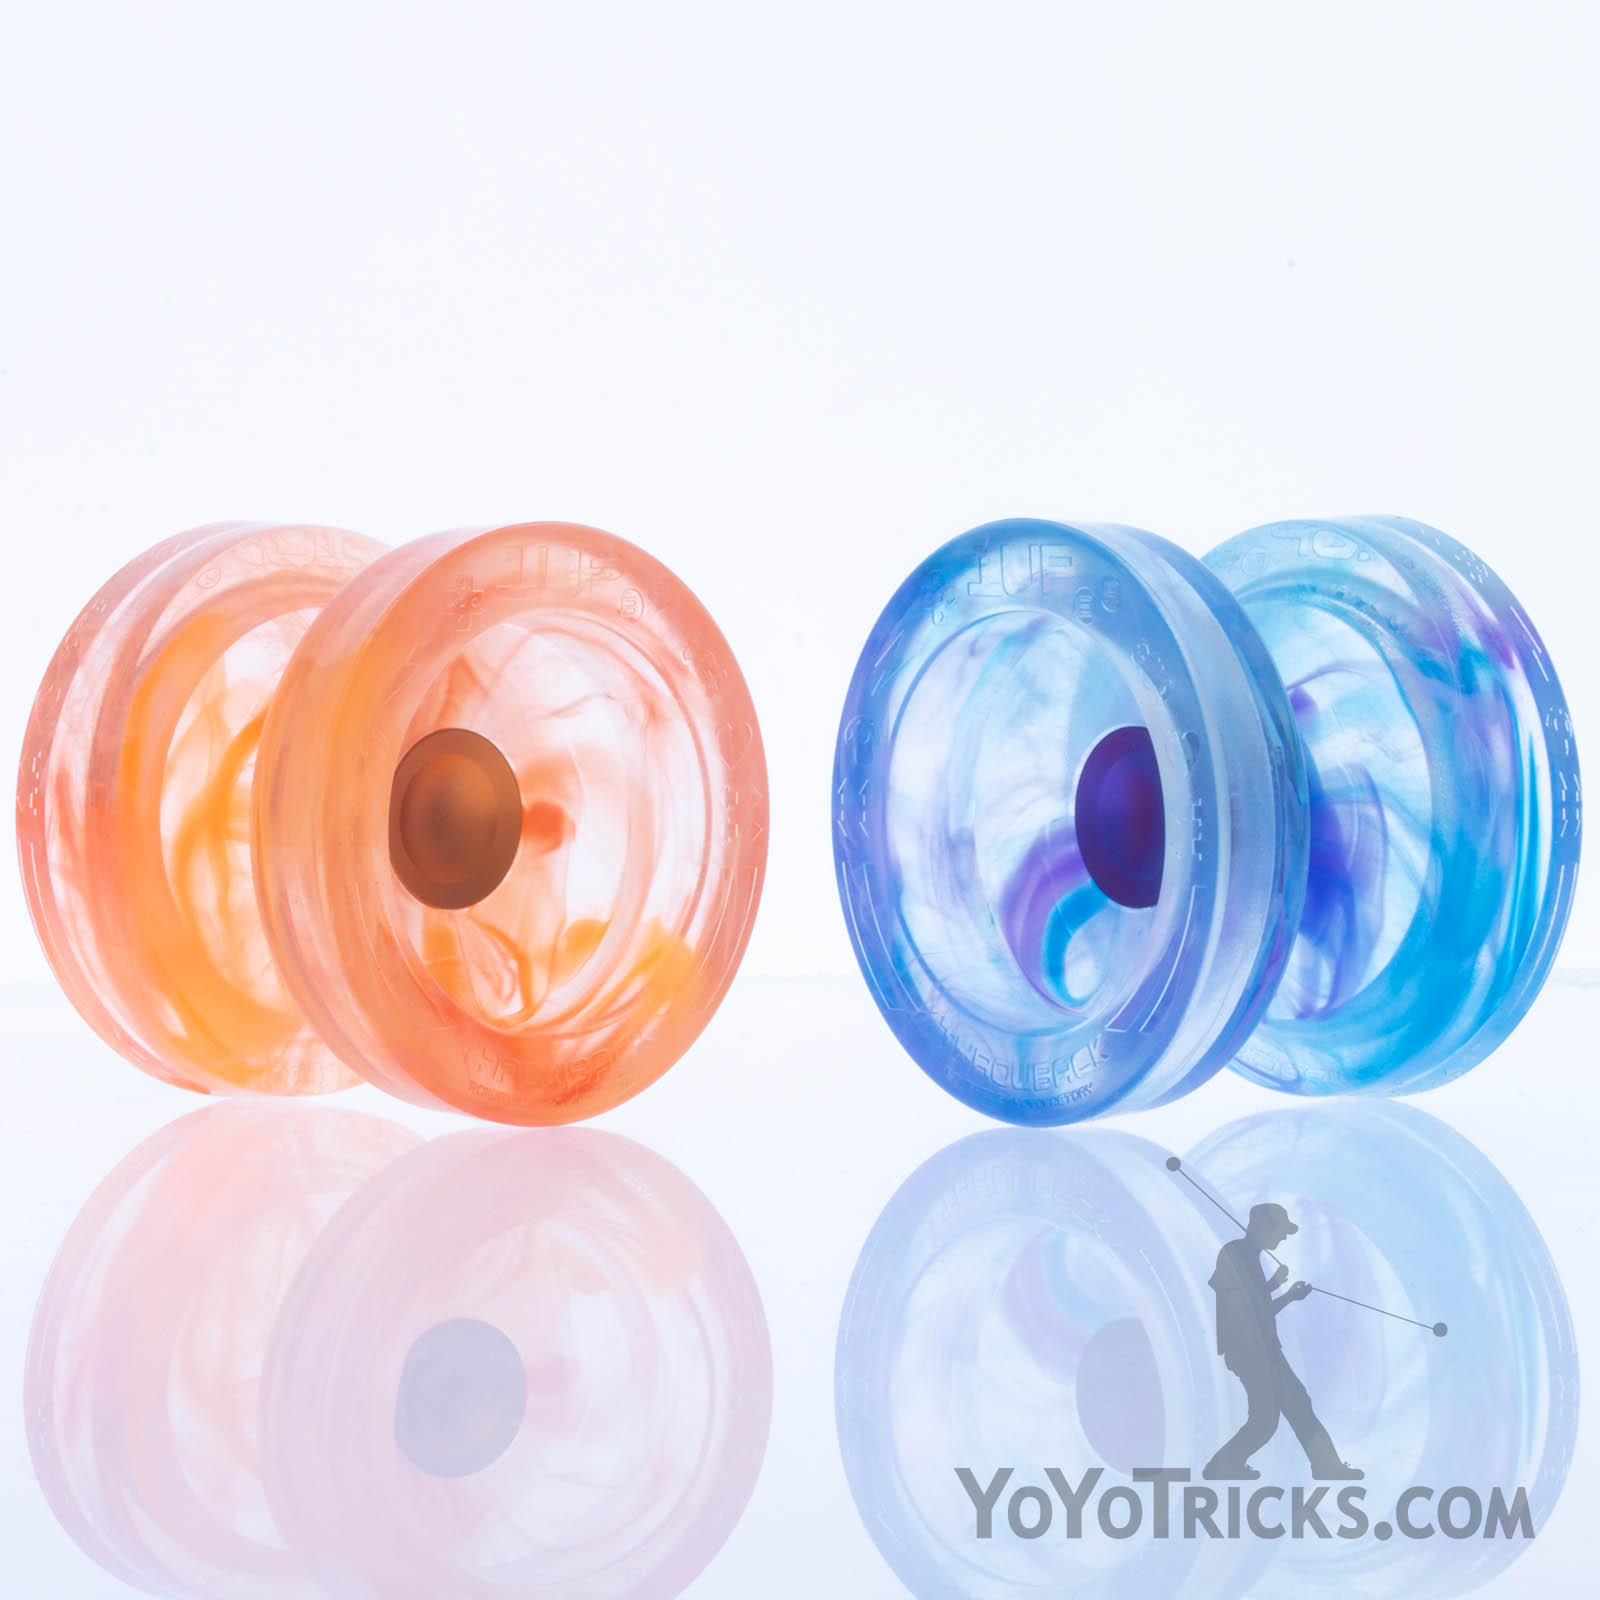 1Up Yoyo - Best Unresponsive Plastic yoyos